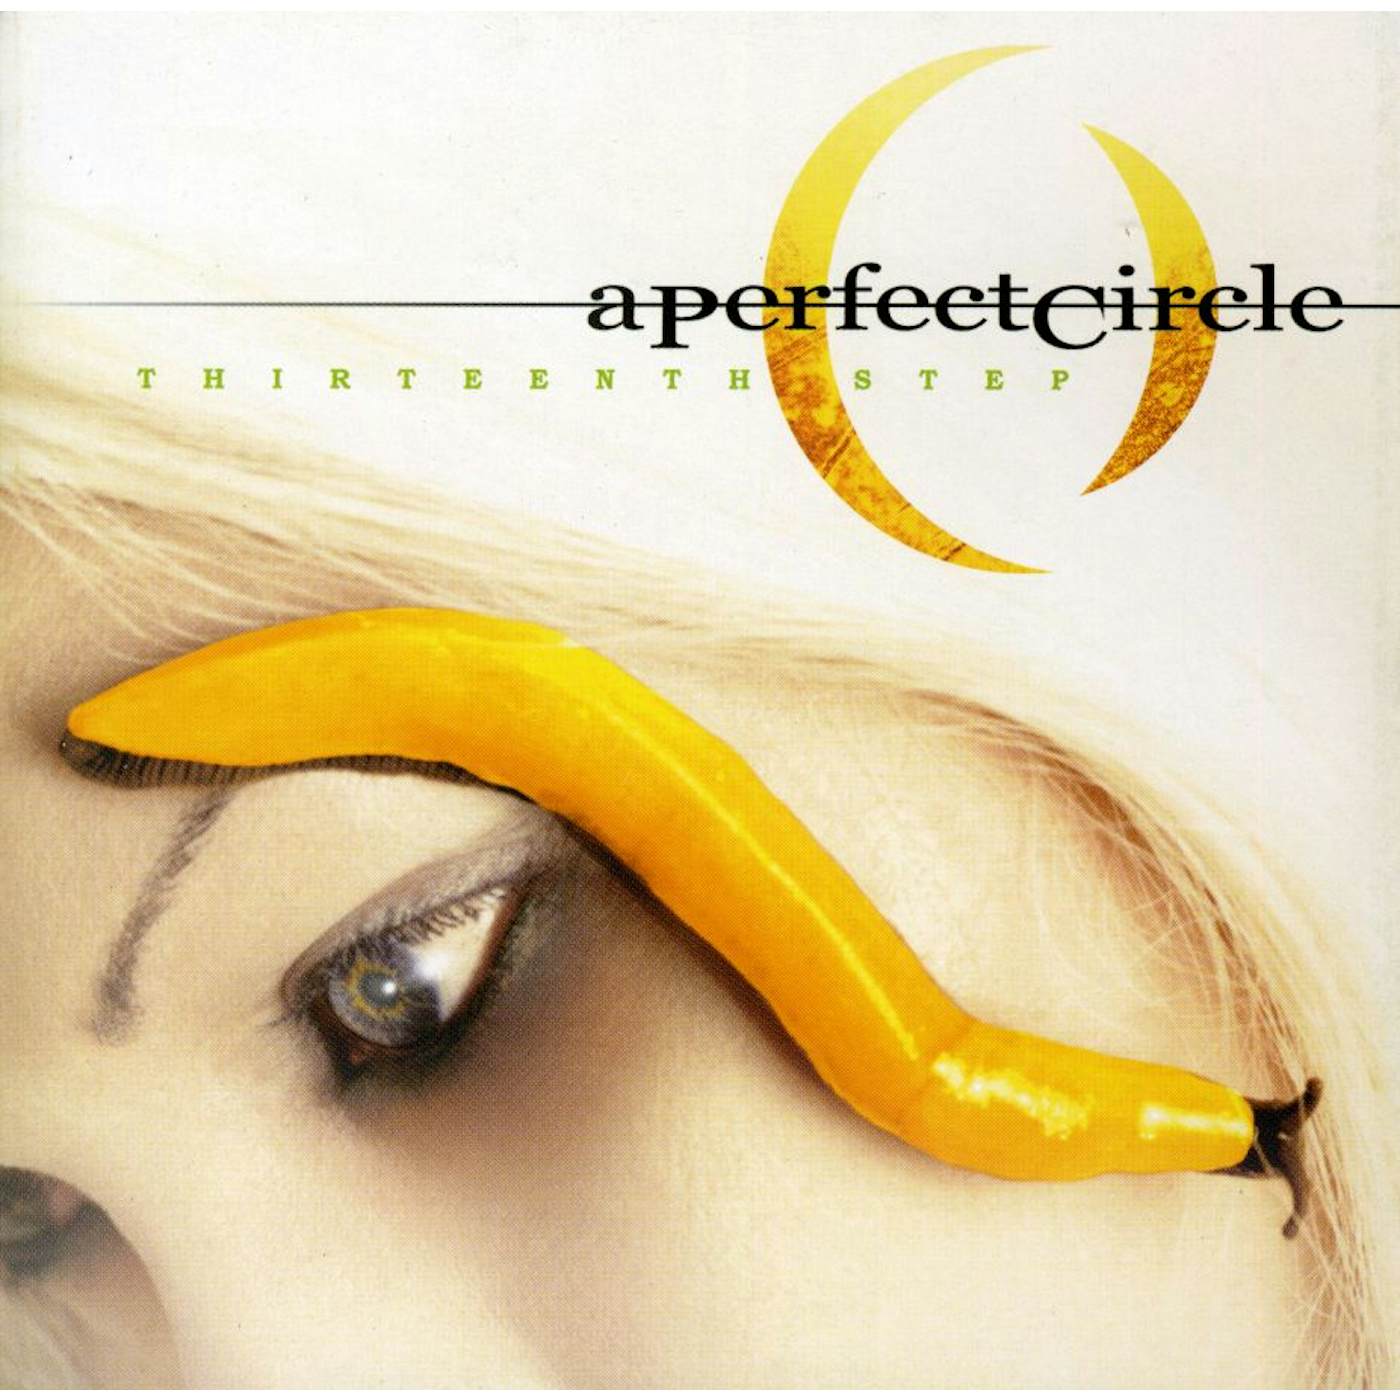 A Perfect Circle THIRTEENTH STEP CD